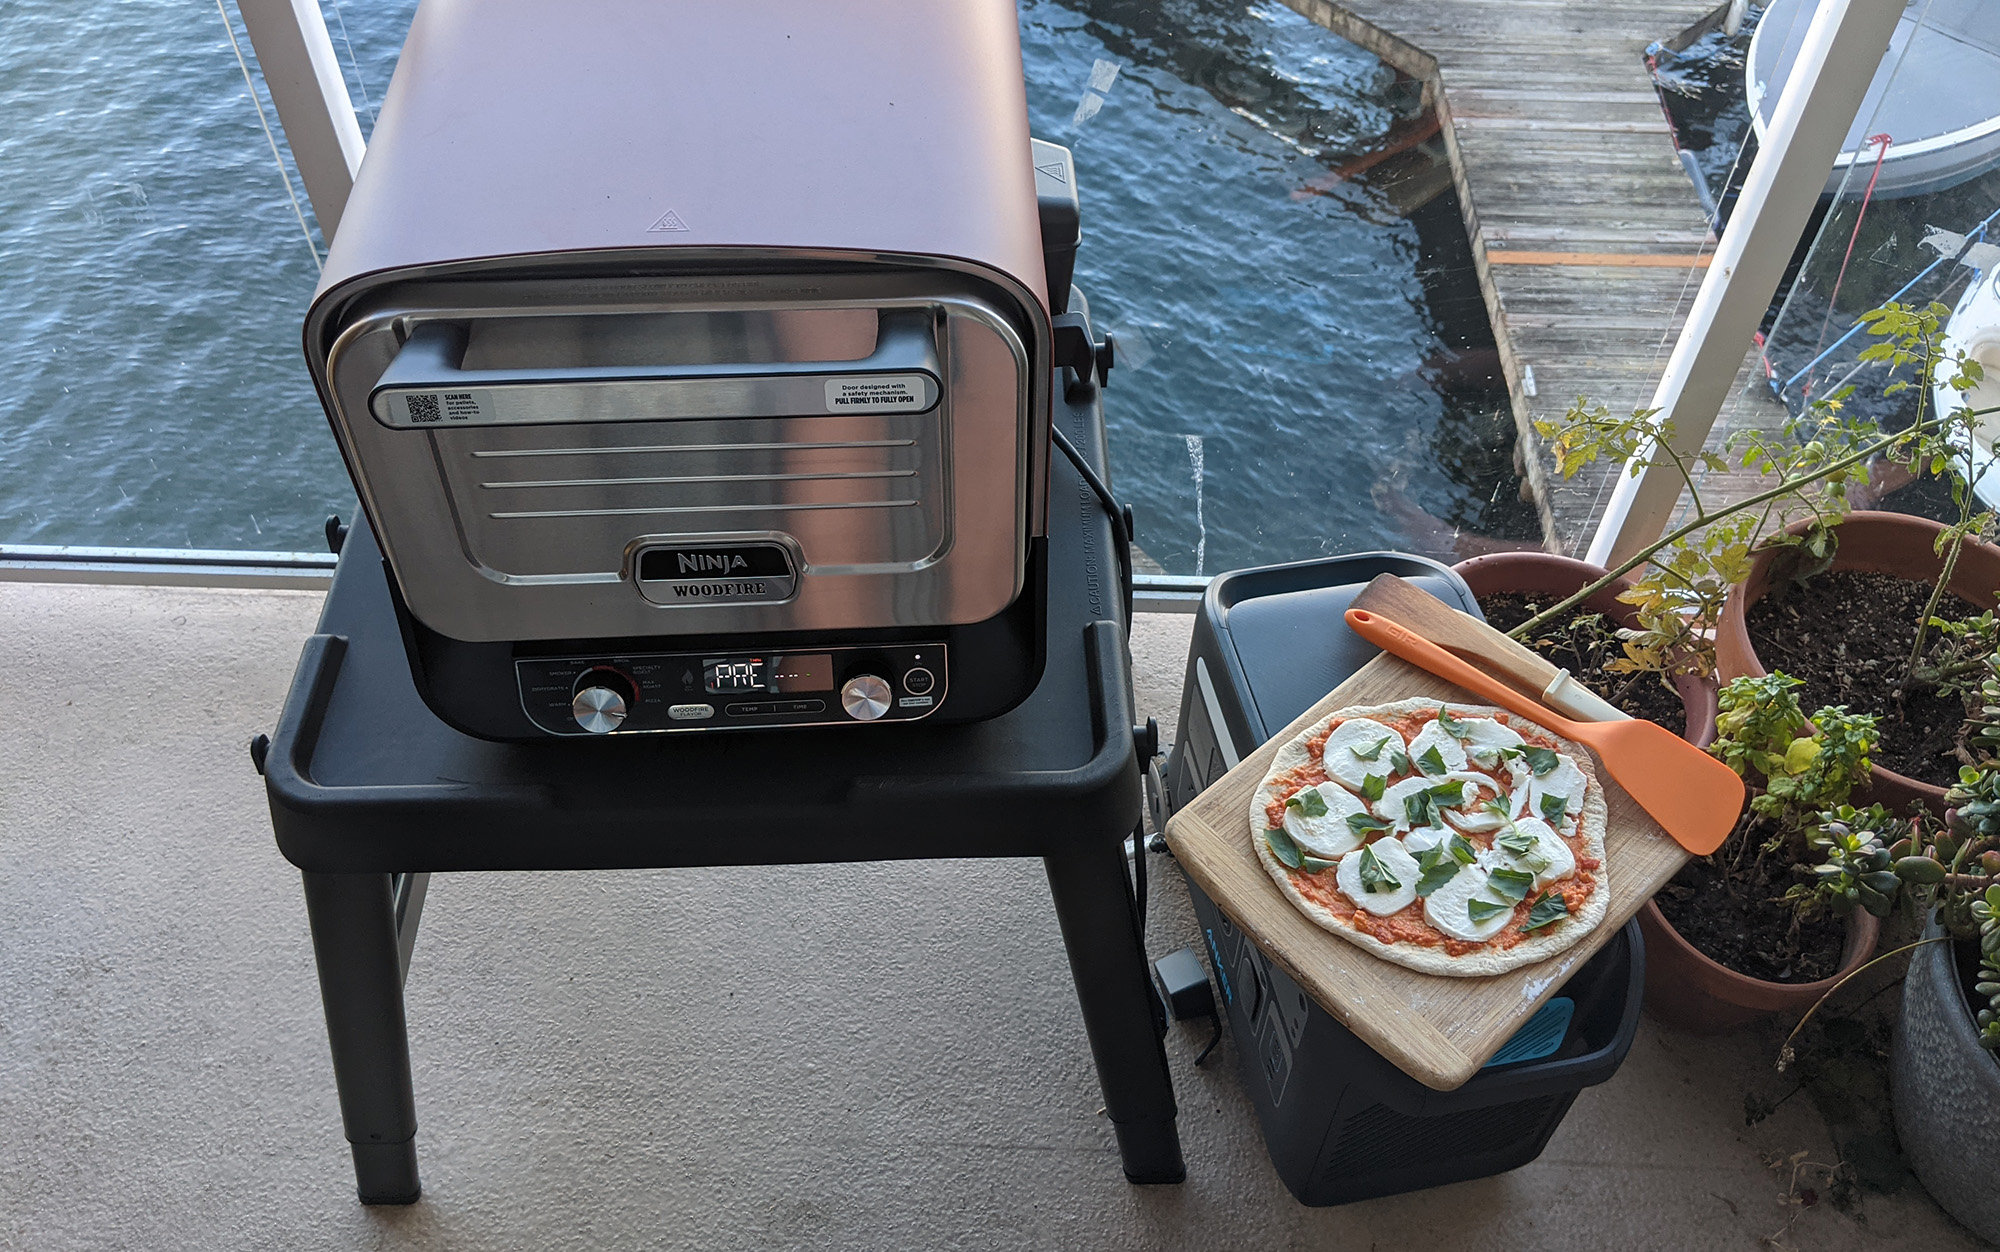 Ninja Woodfire 8-in-1 Outdoor BBQ Smoker & Pizza Oven